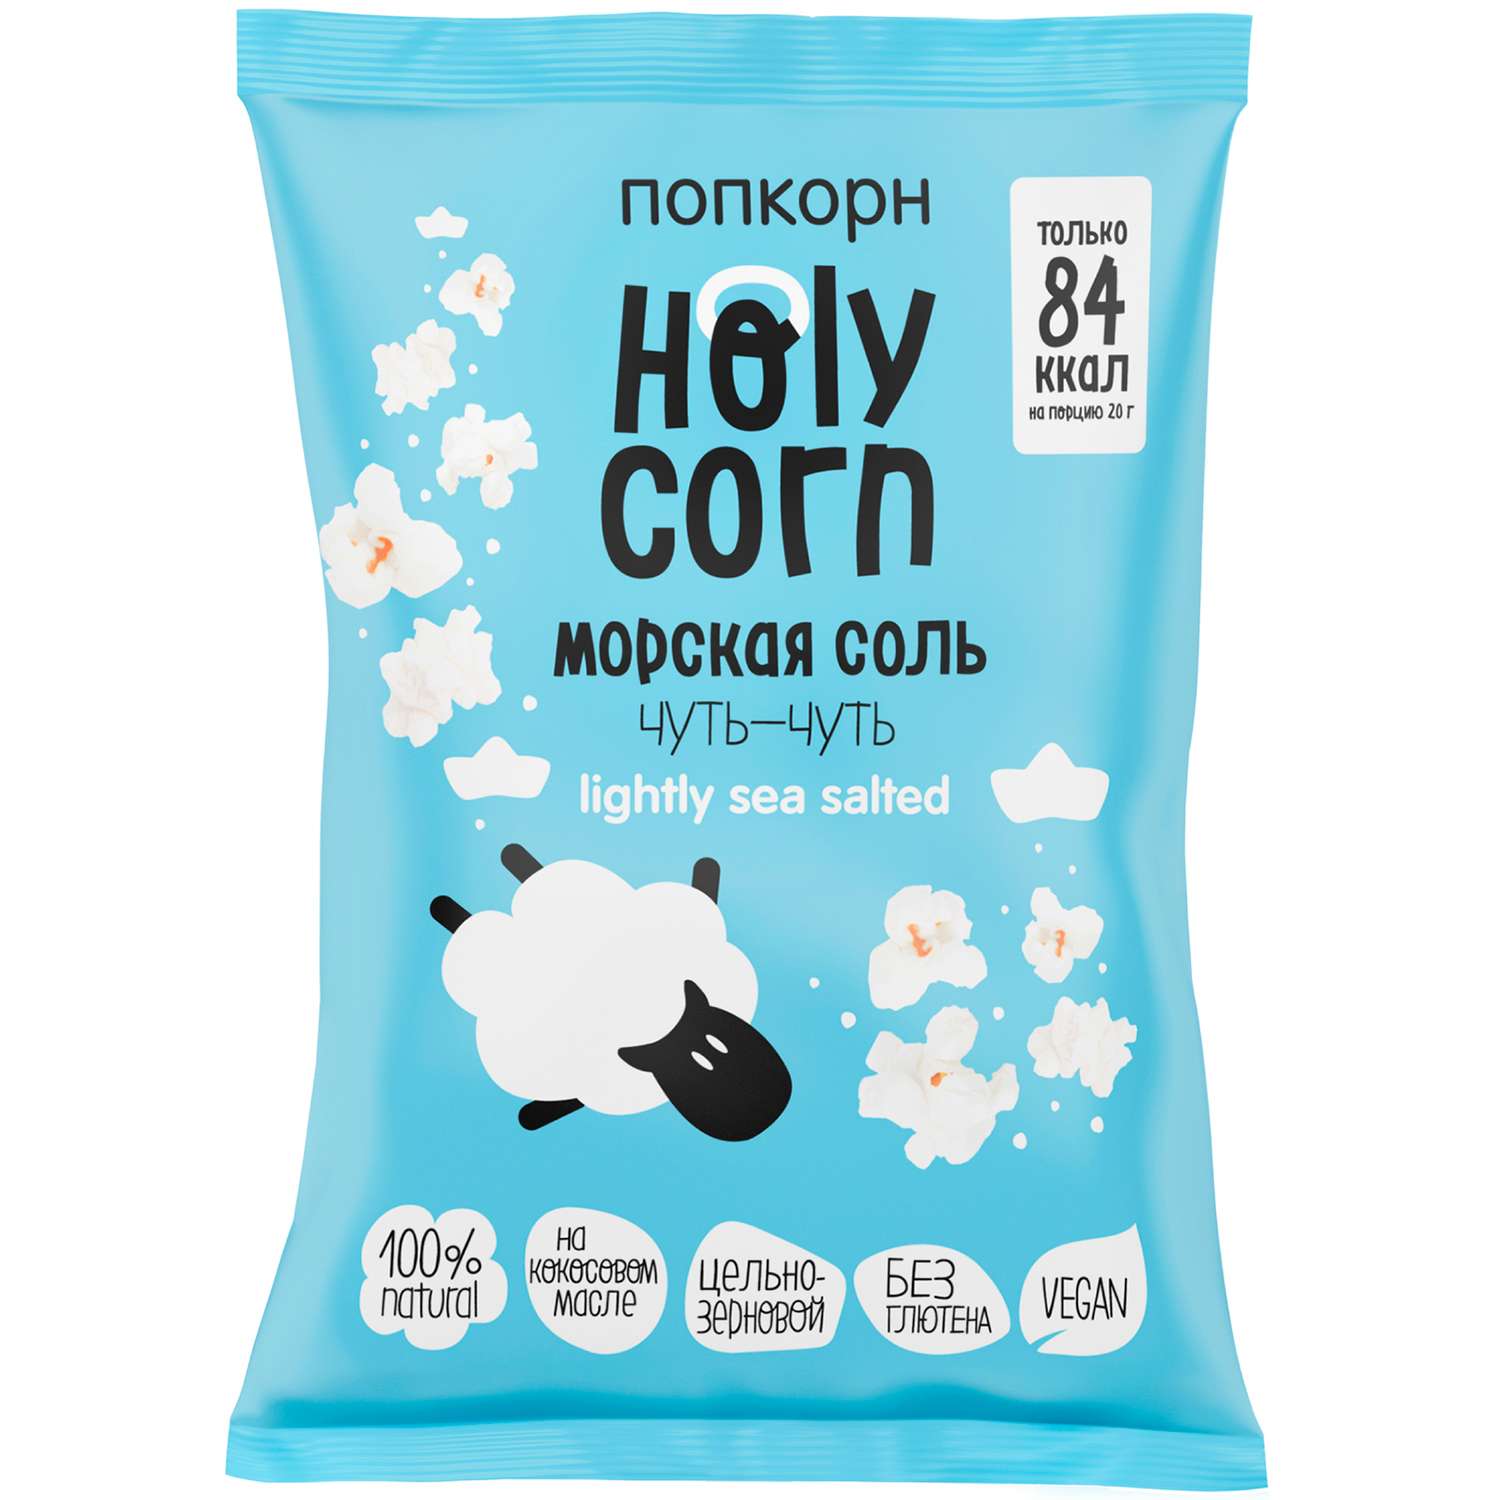 Попкорн Holy Corn морская соль 60г - фото 1